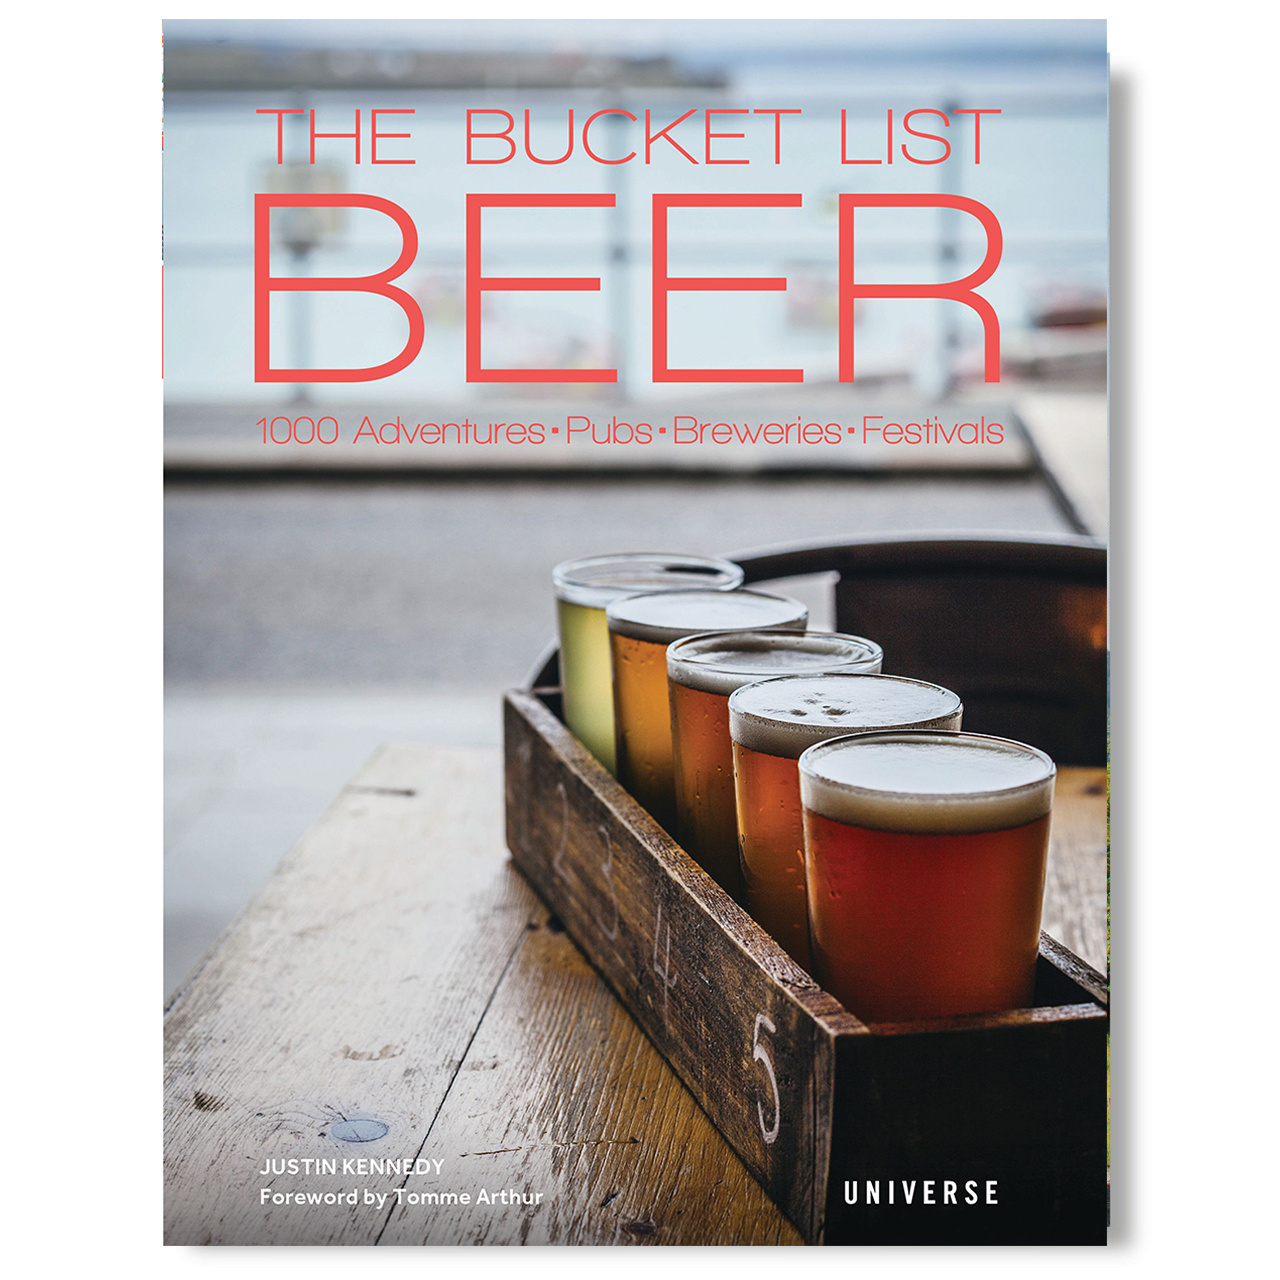 The Bucket List: Beer KSIĄŻKA O PIWIE